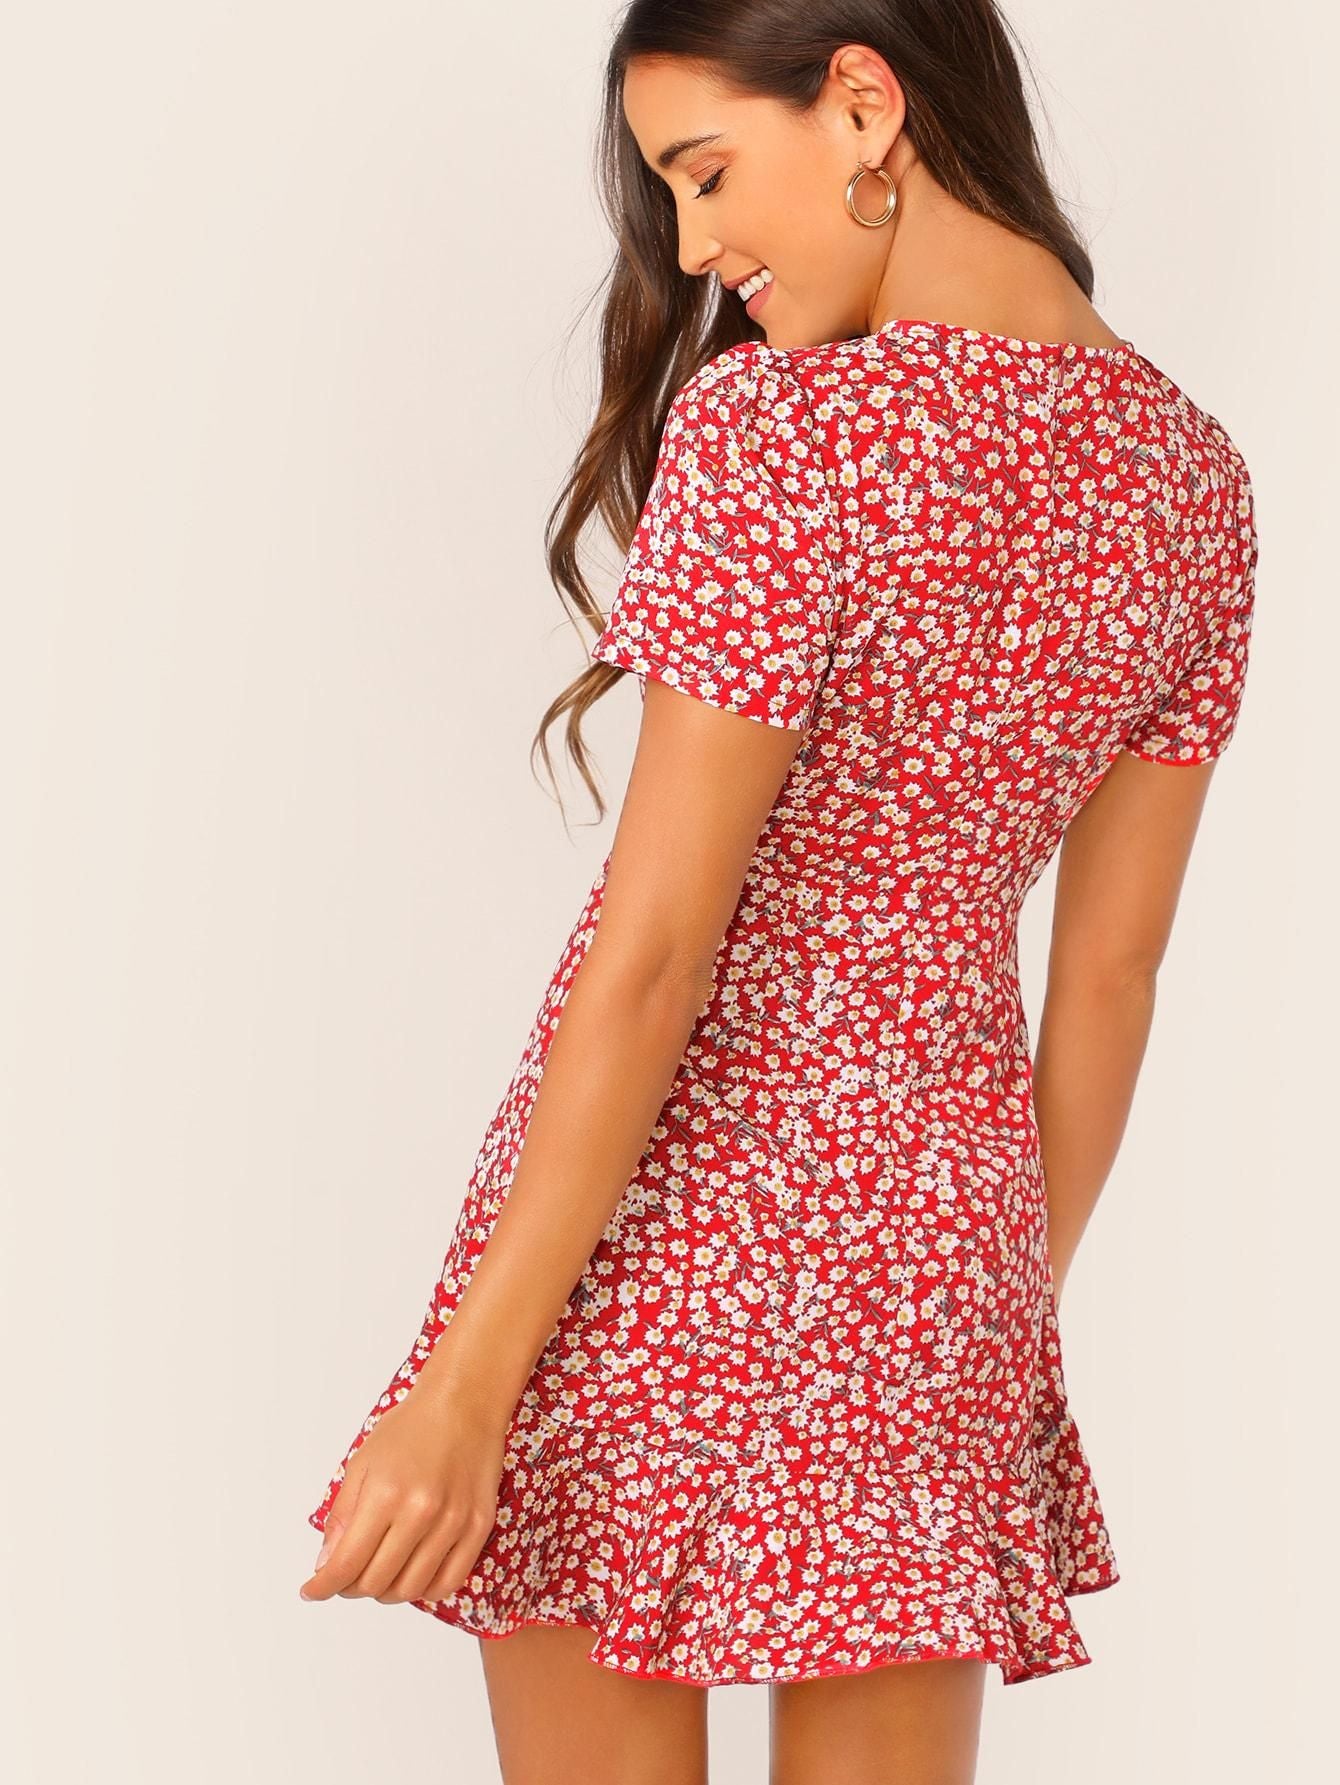 AAHWAN Women's Red Ditsy Floral Print Short Sleeves Mini Short Dress